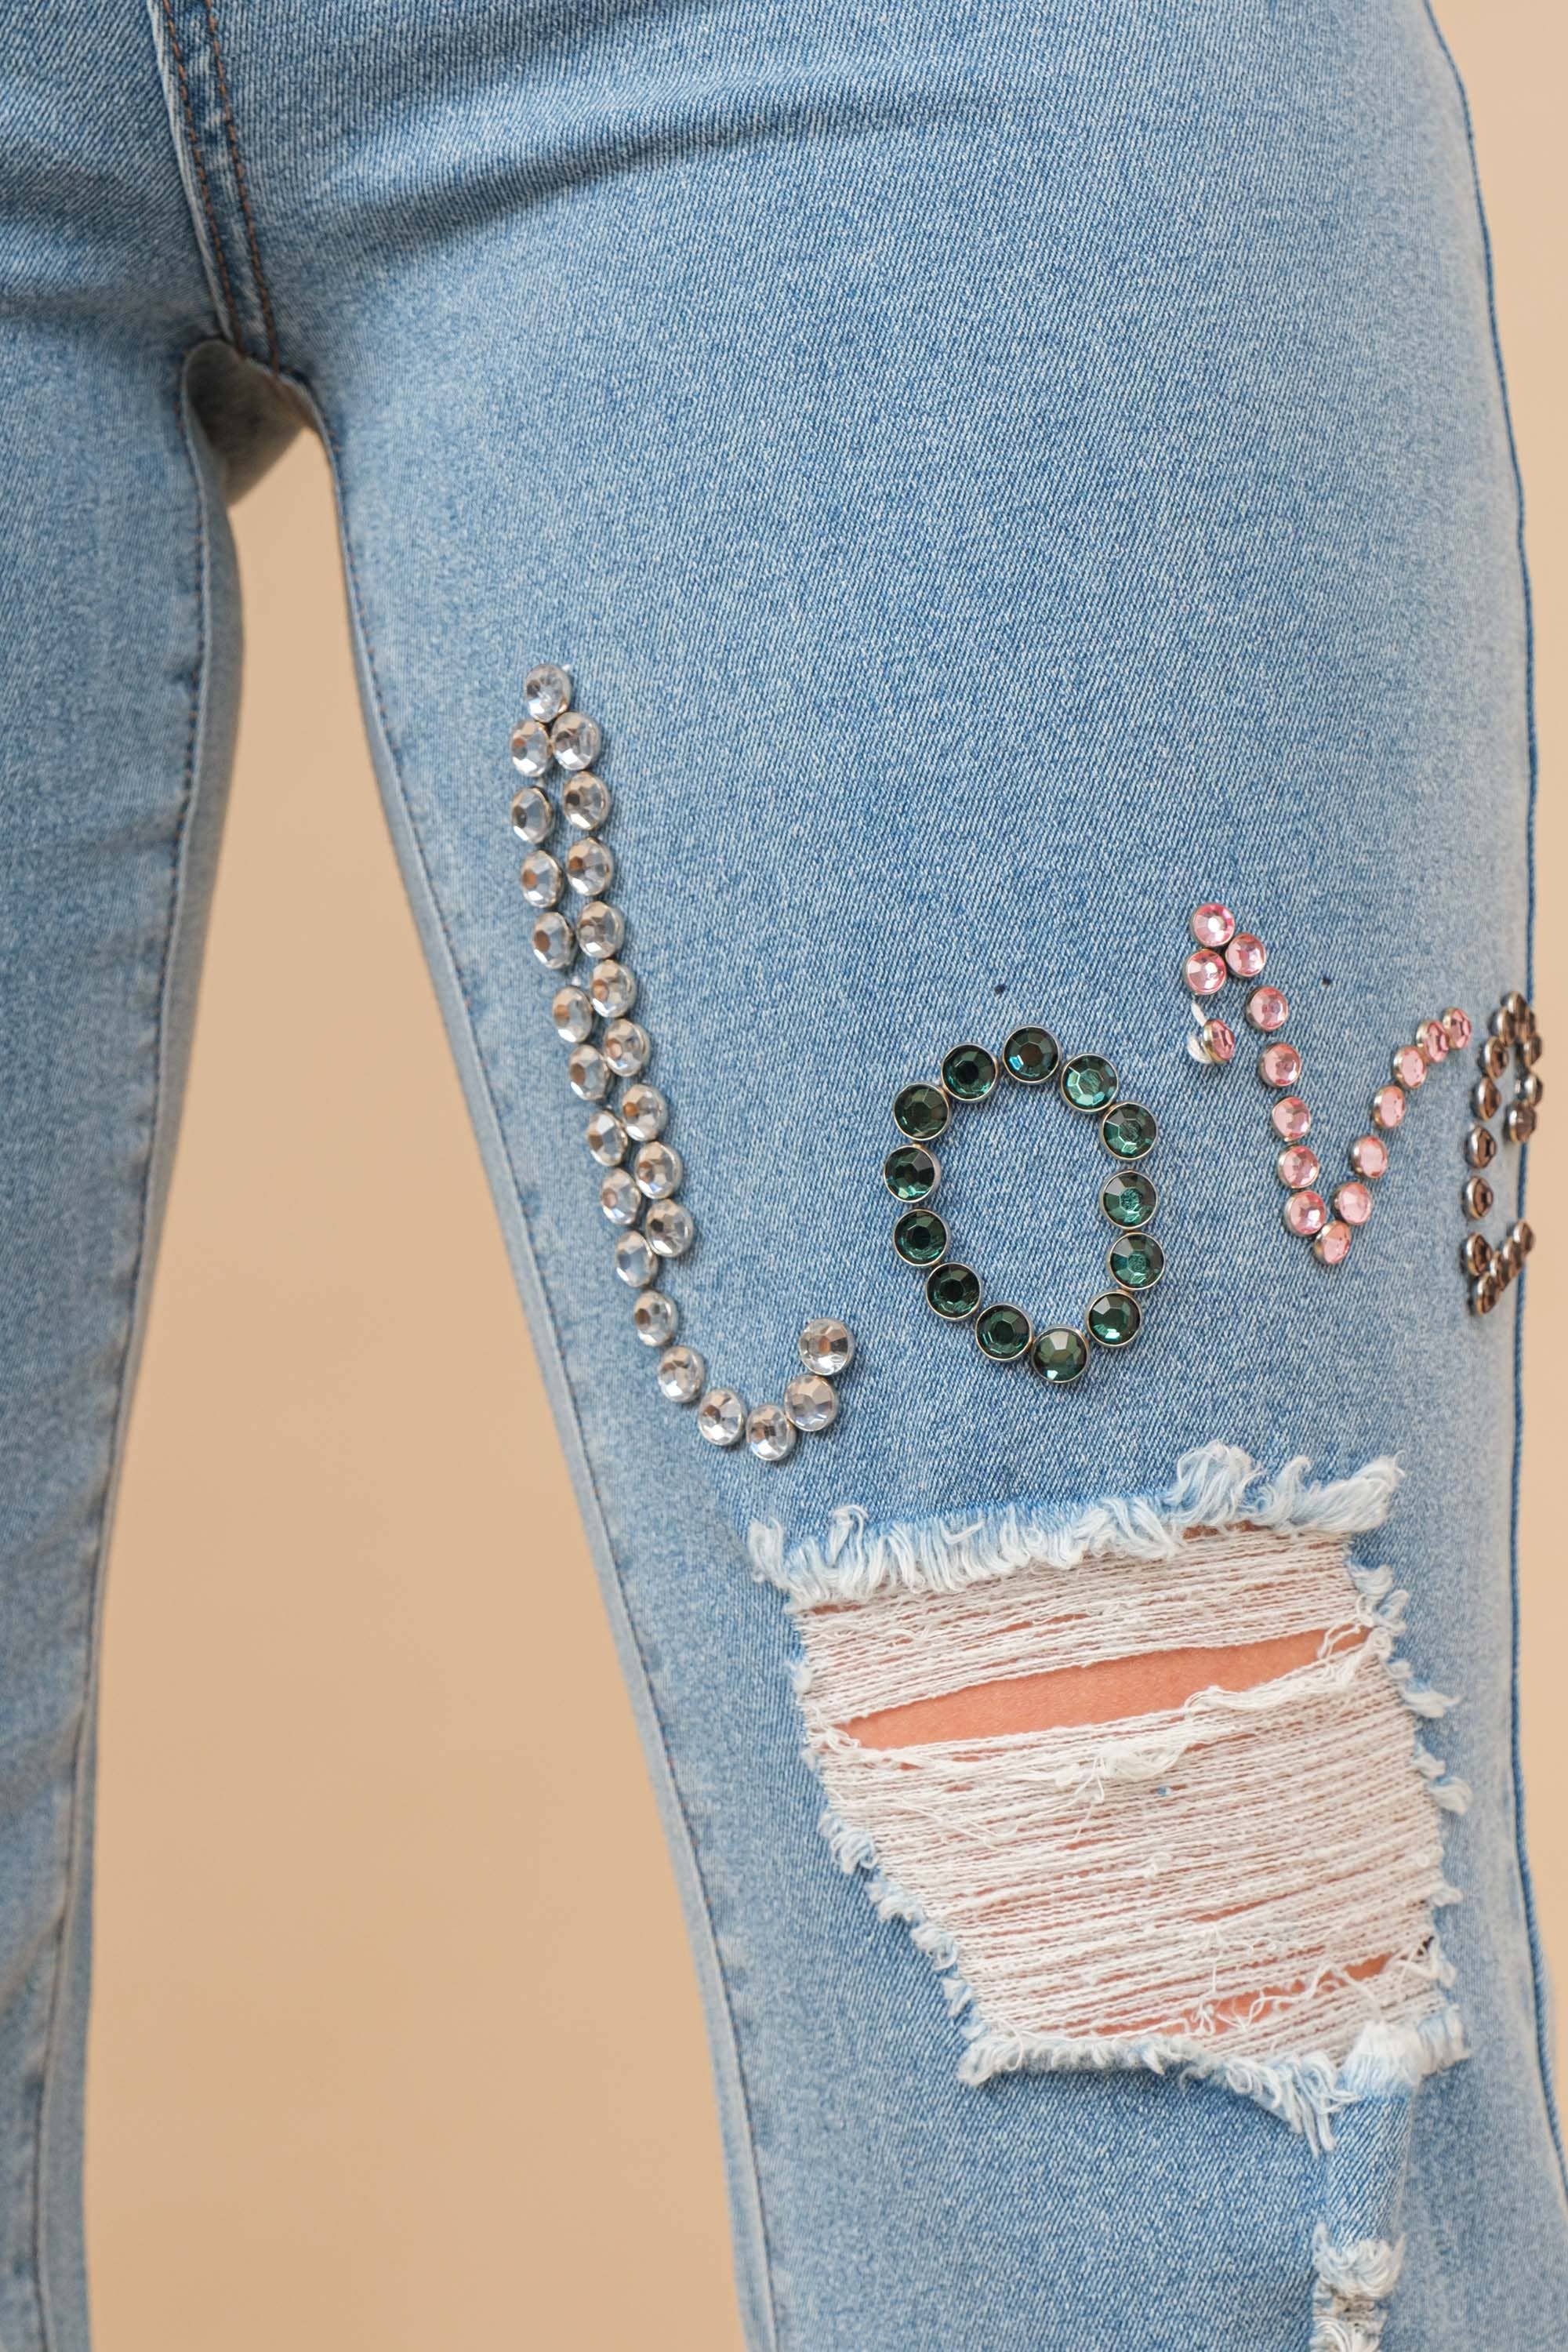 High Waisted LOVE Colored Rhinestone Embellishment Jeans